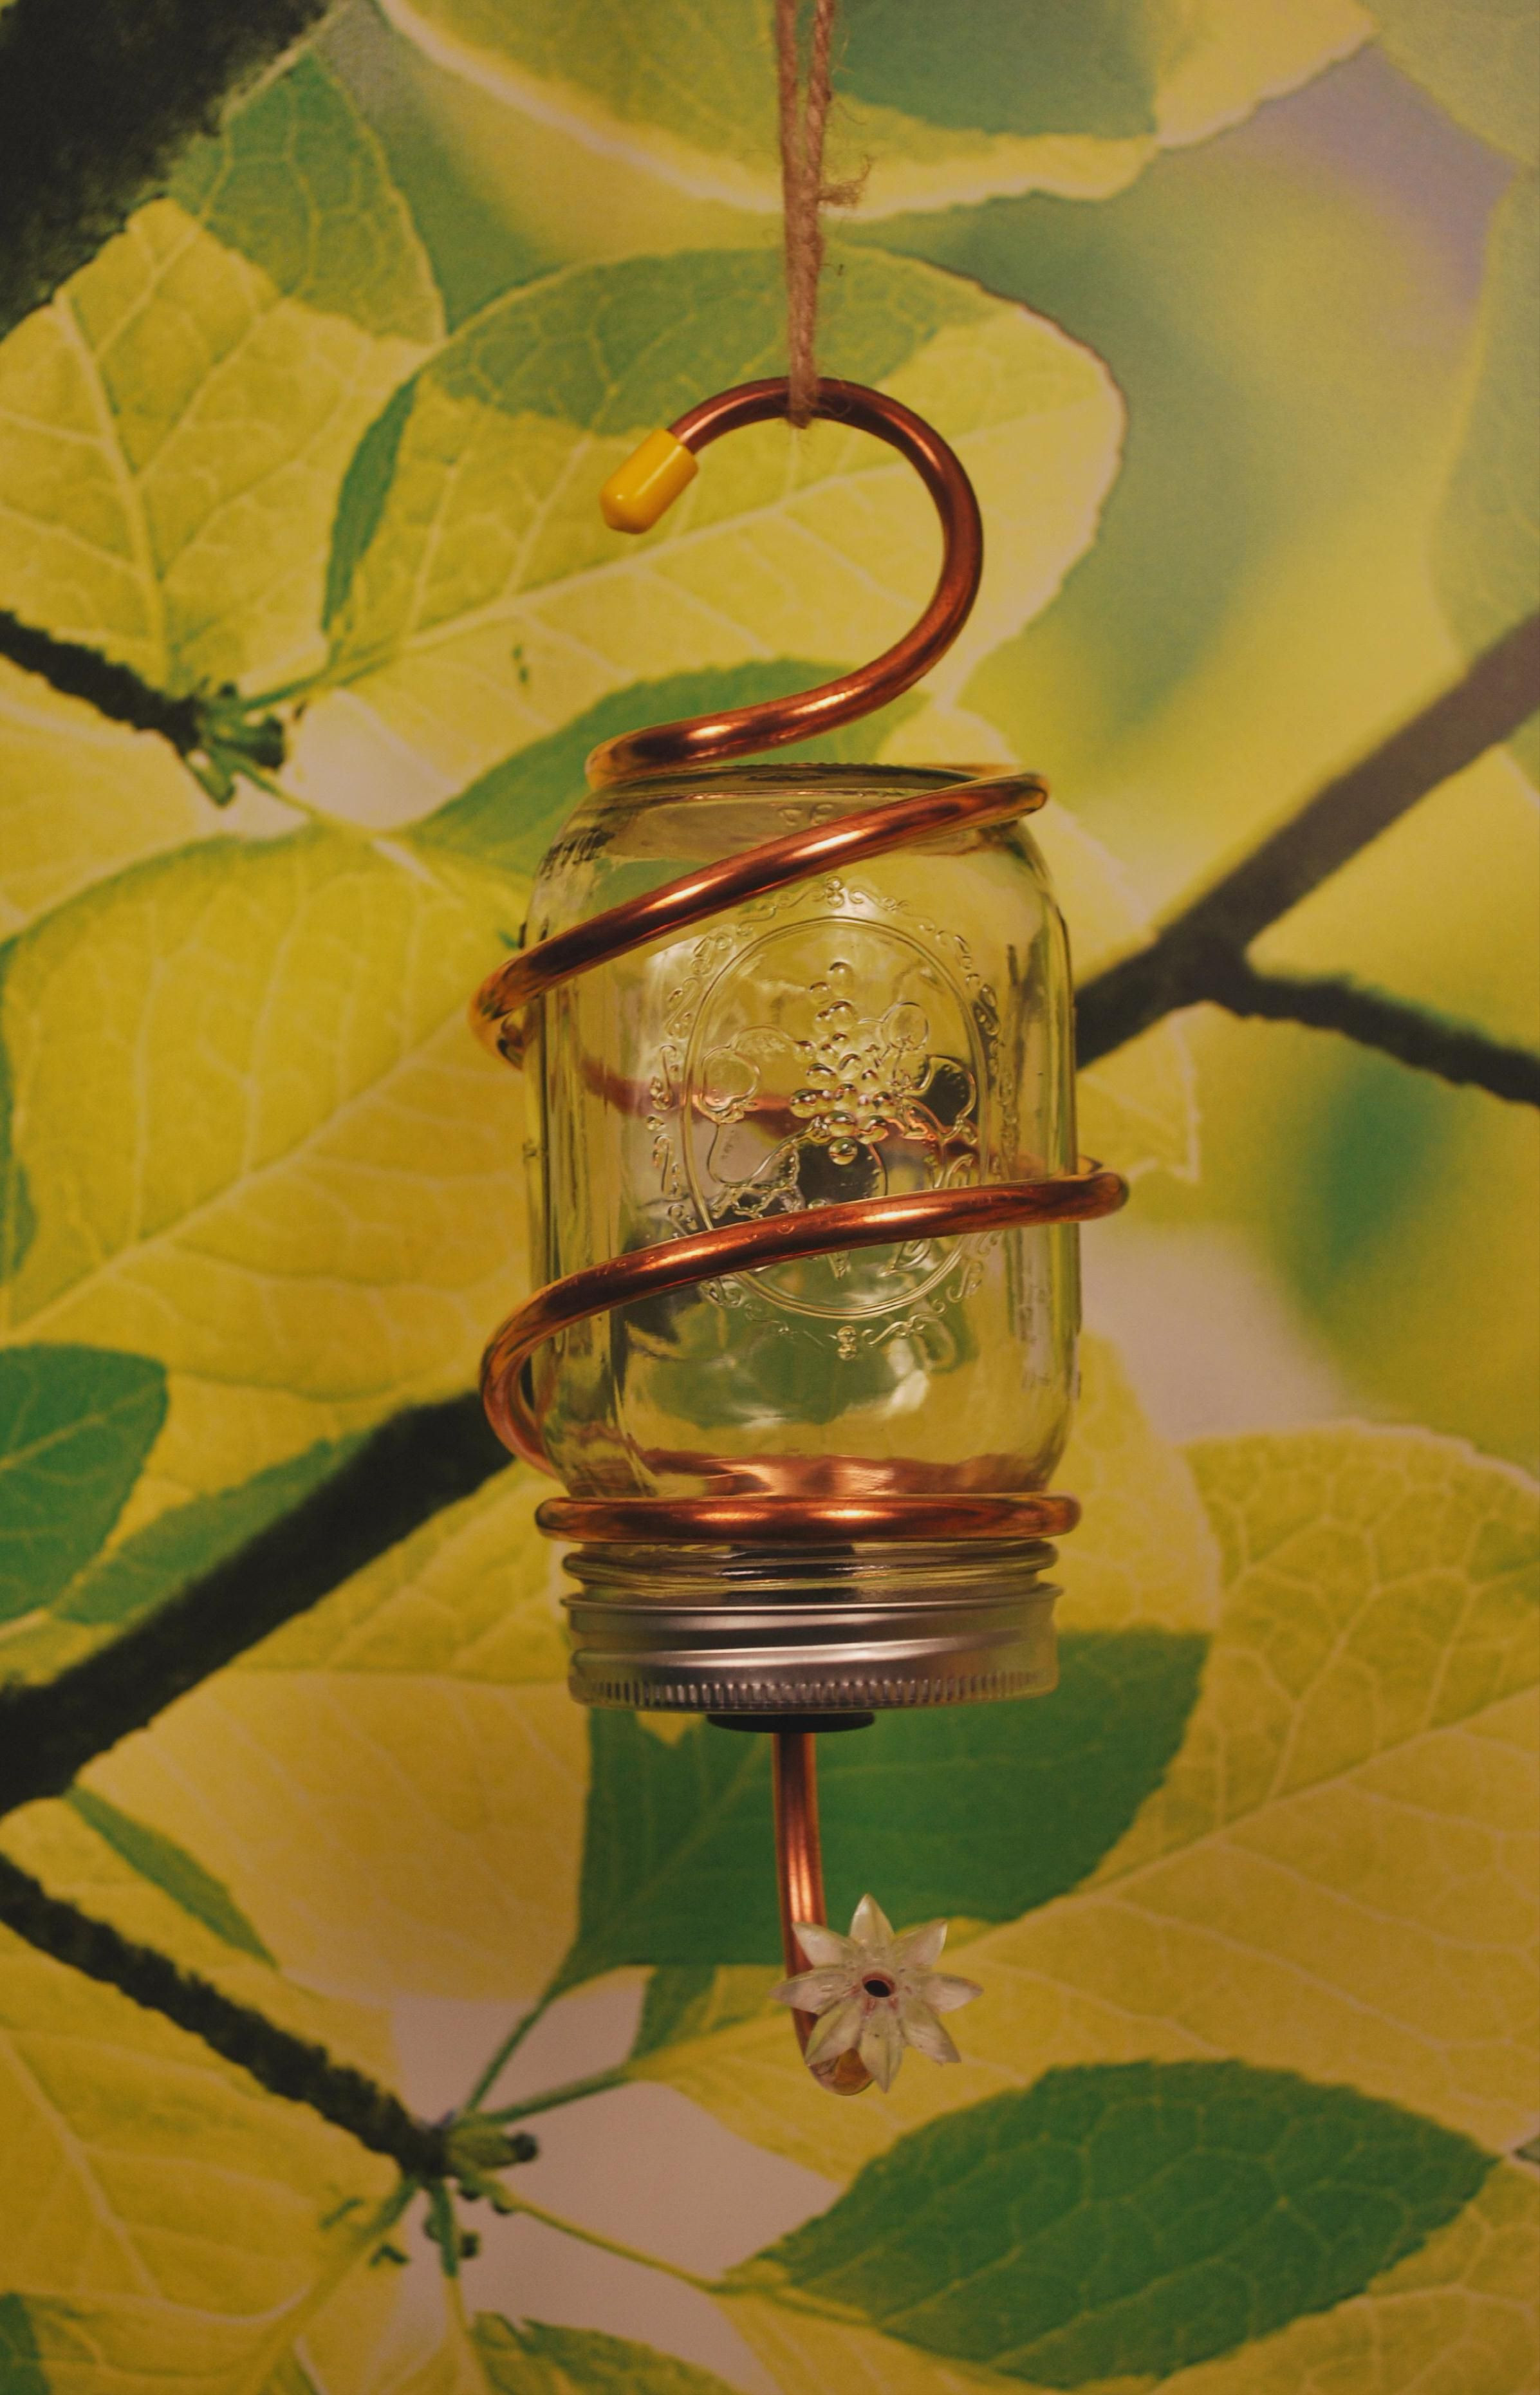 Best ideas about DIY Hummingbird Feeder Mason Jar
. Save or Pin Mason Jar Hummingbird Feeder Now.